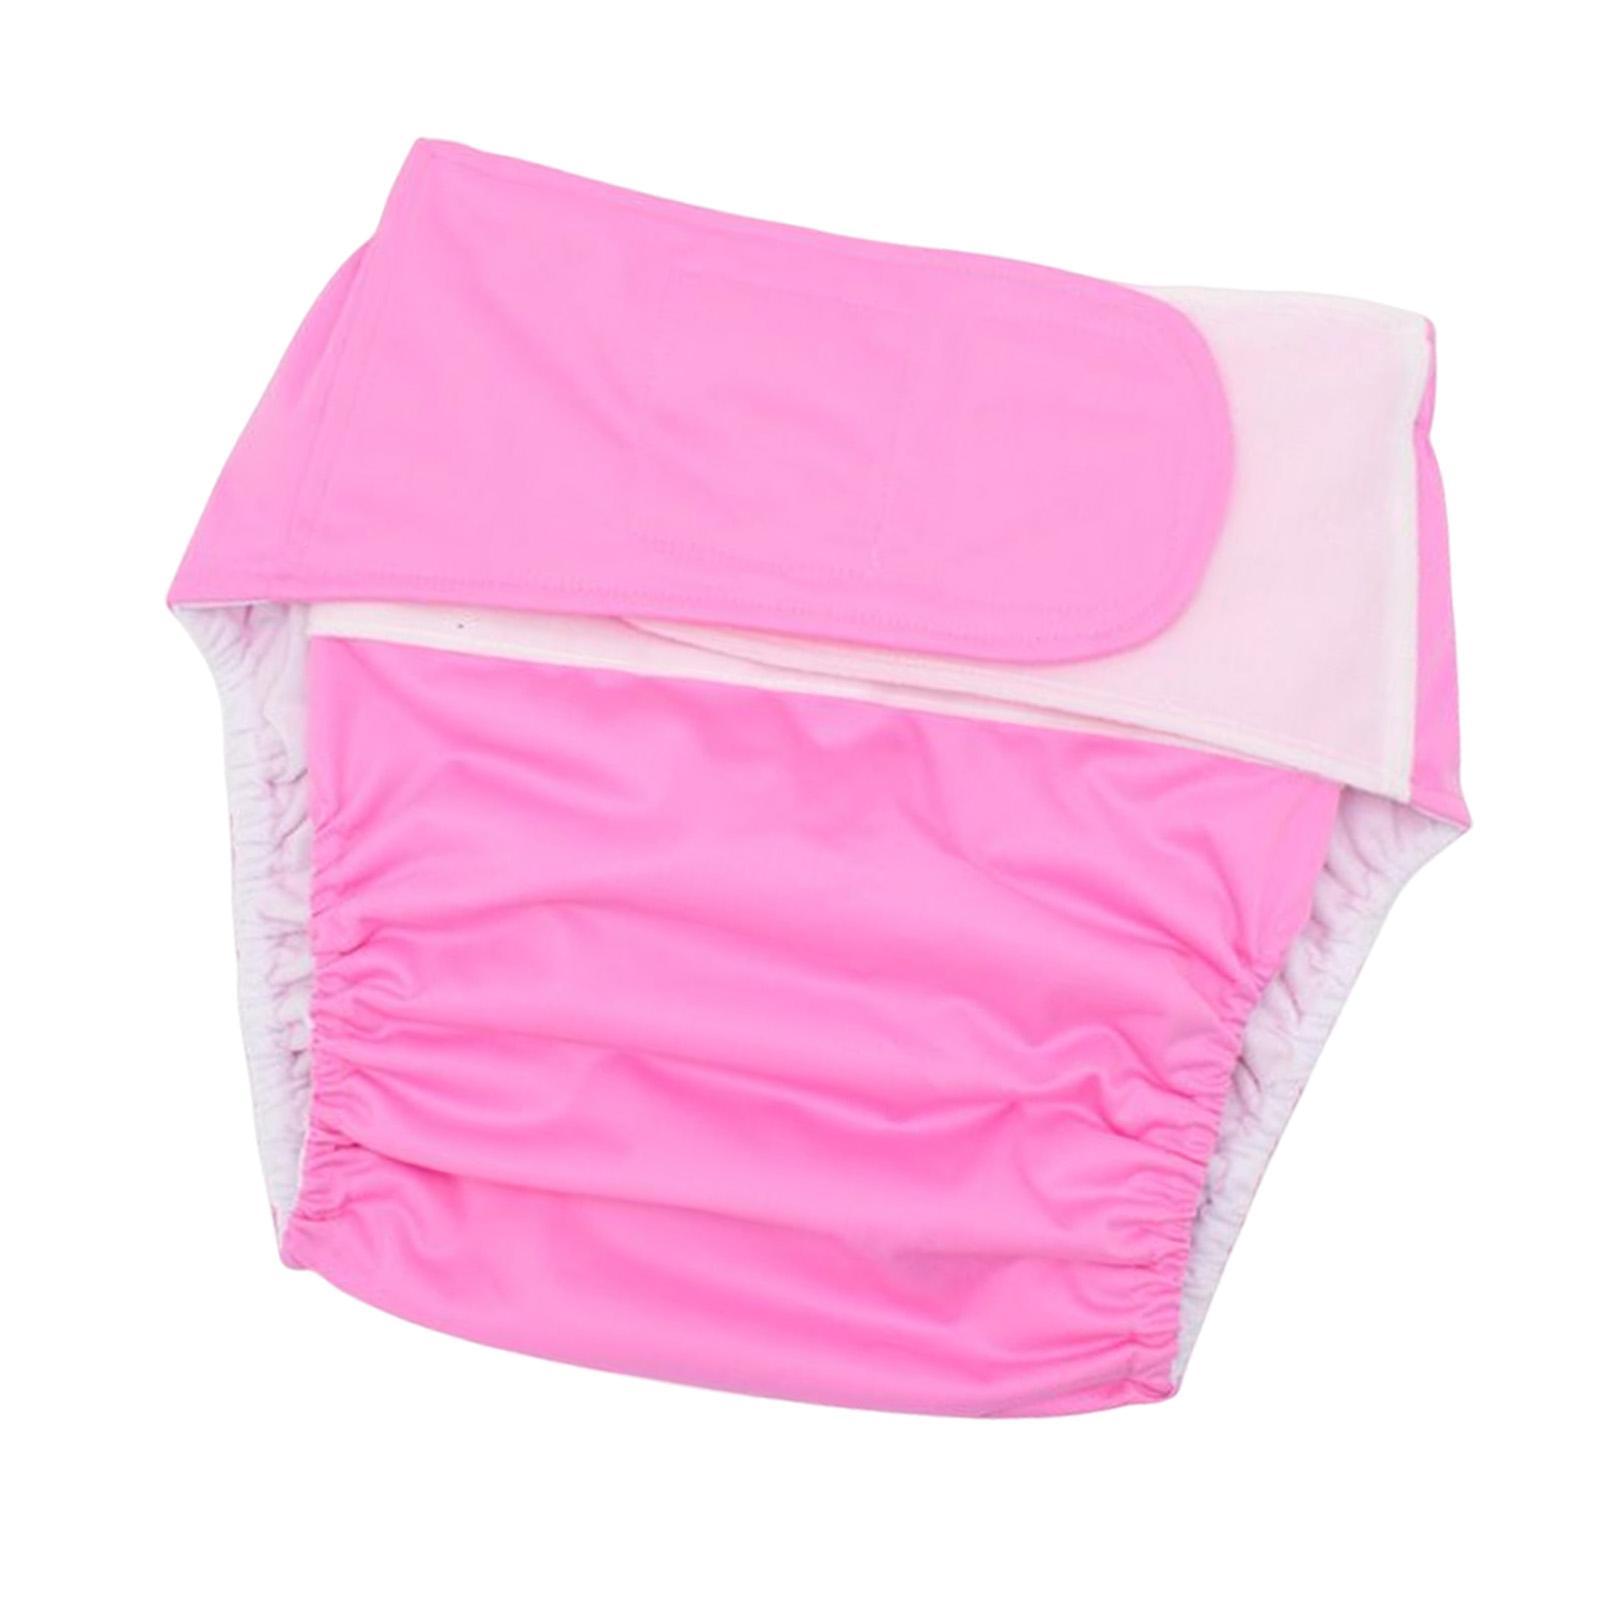 Adult Diaper Pants, Reusable Adult Diaper Nappy Cover, Adjustable Waist, Convenient Waterproof Adult Diaper Cover Adult Cloth Diaper Women Men